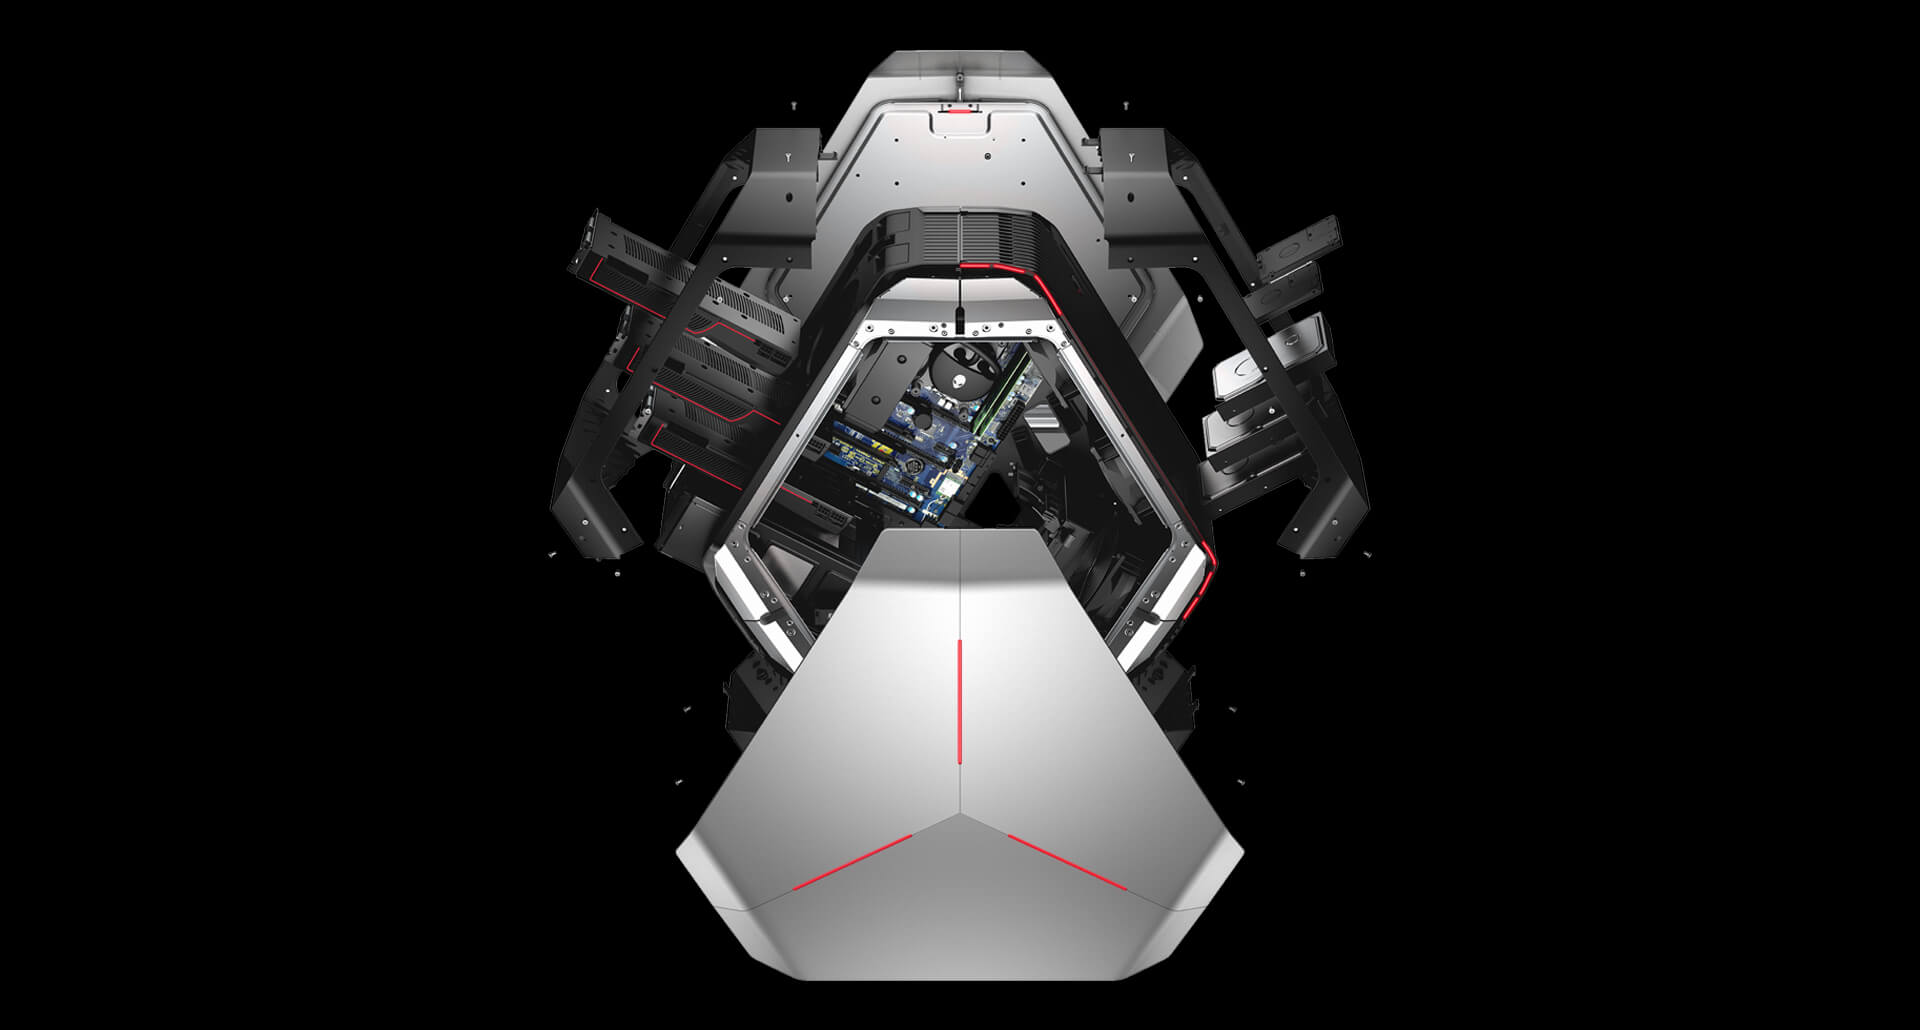 Alienware Announces New Area 51 Gaming PC Featuring AMD Threadripper, Intel Core-X Processors